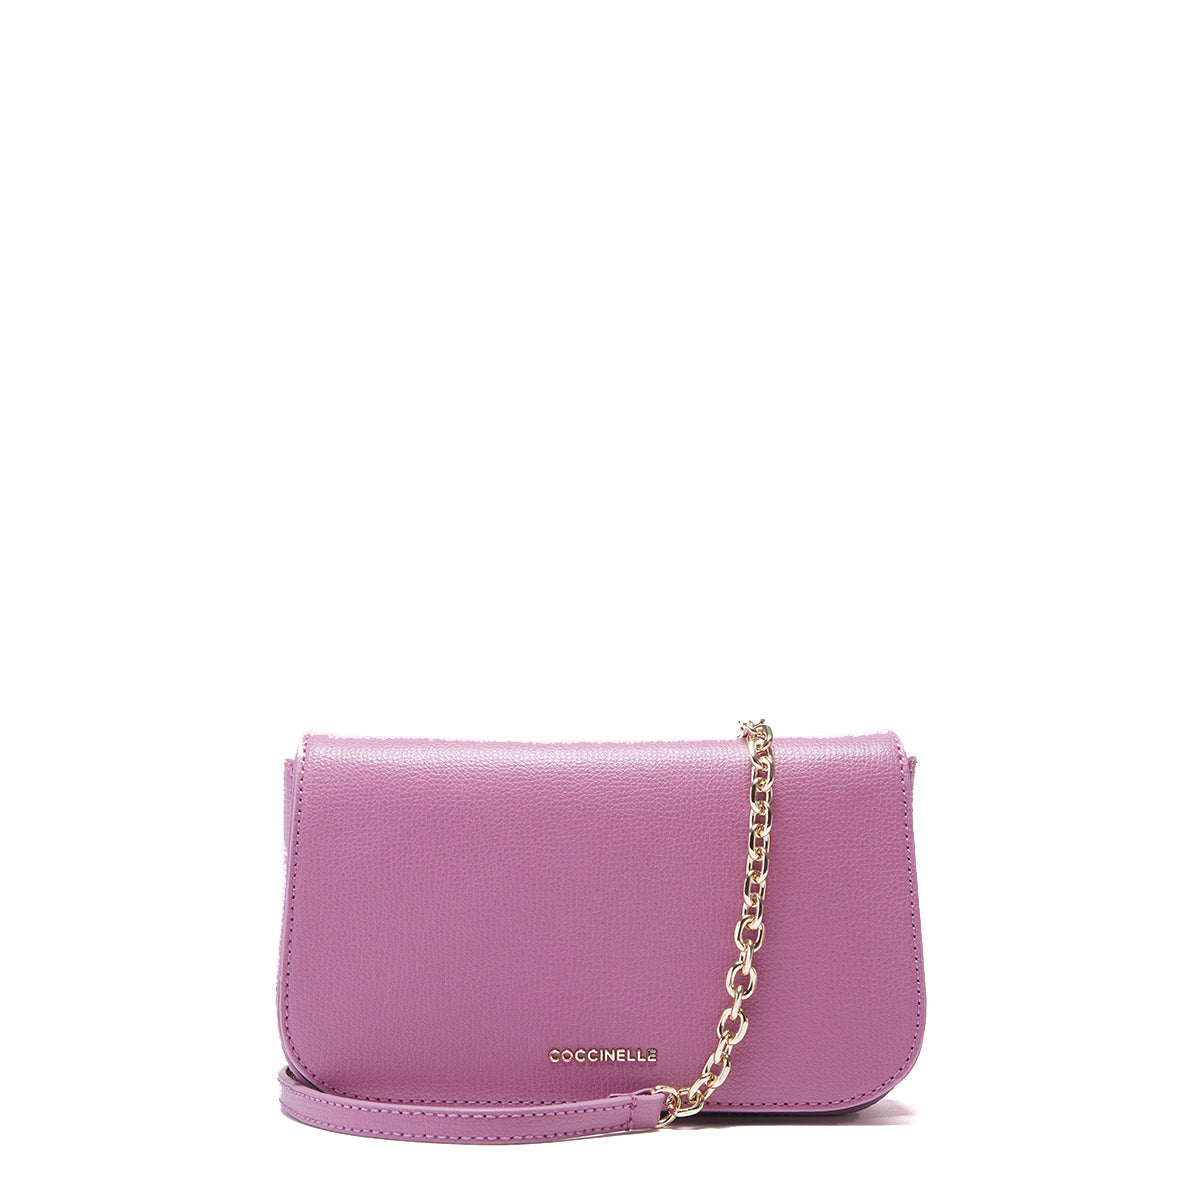 Coccinelle - Minibag Cloud Pulp Pink - PO5550101 - PULP/PINK